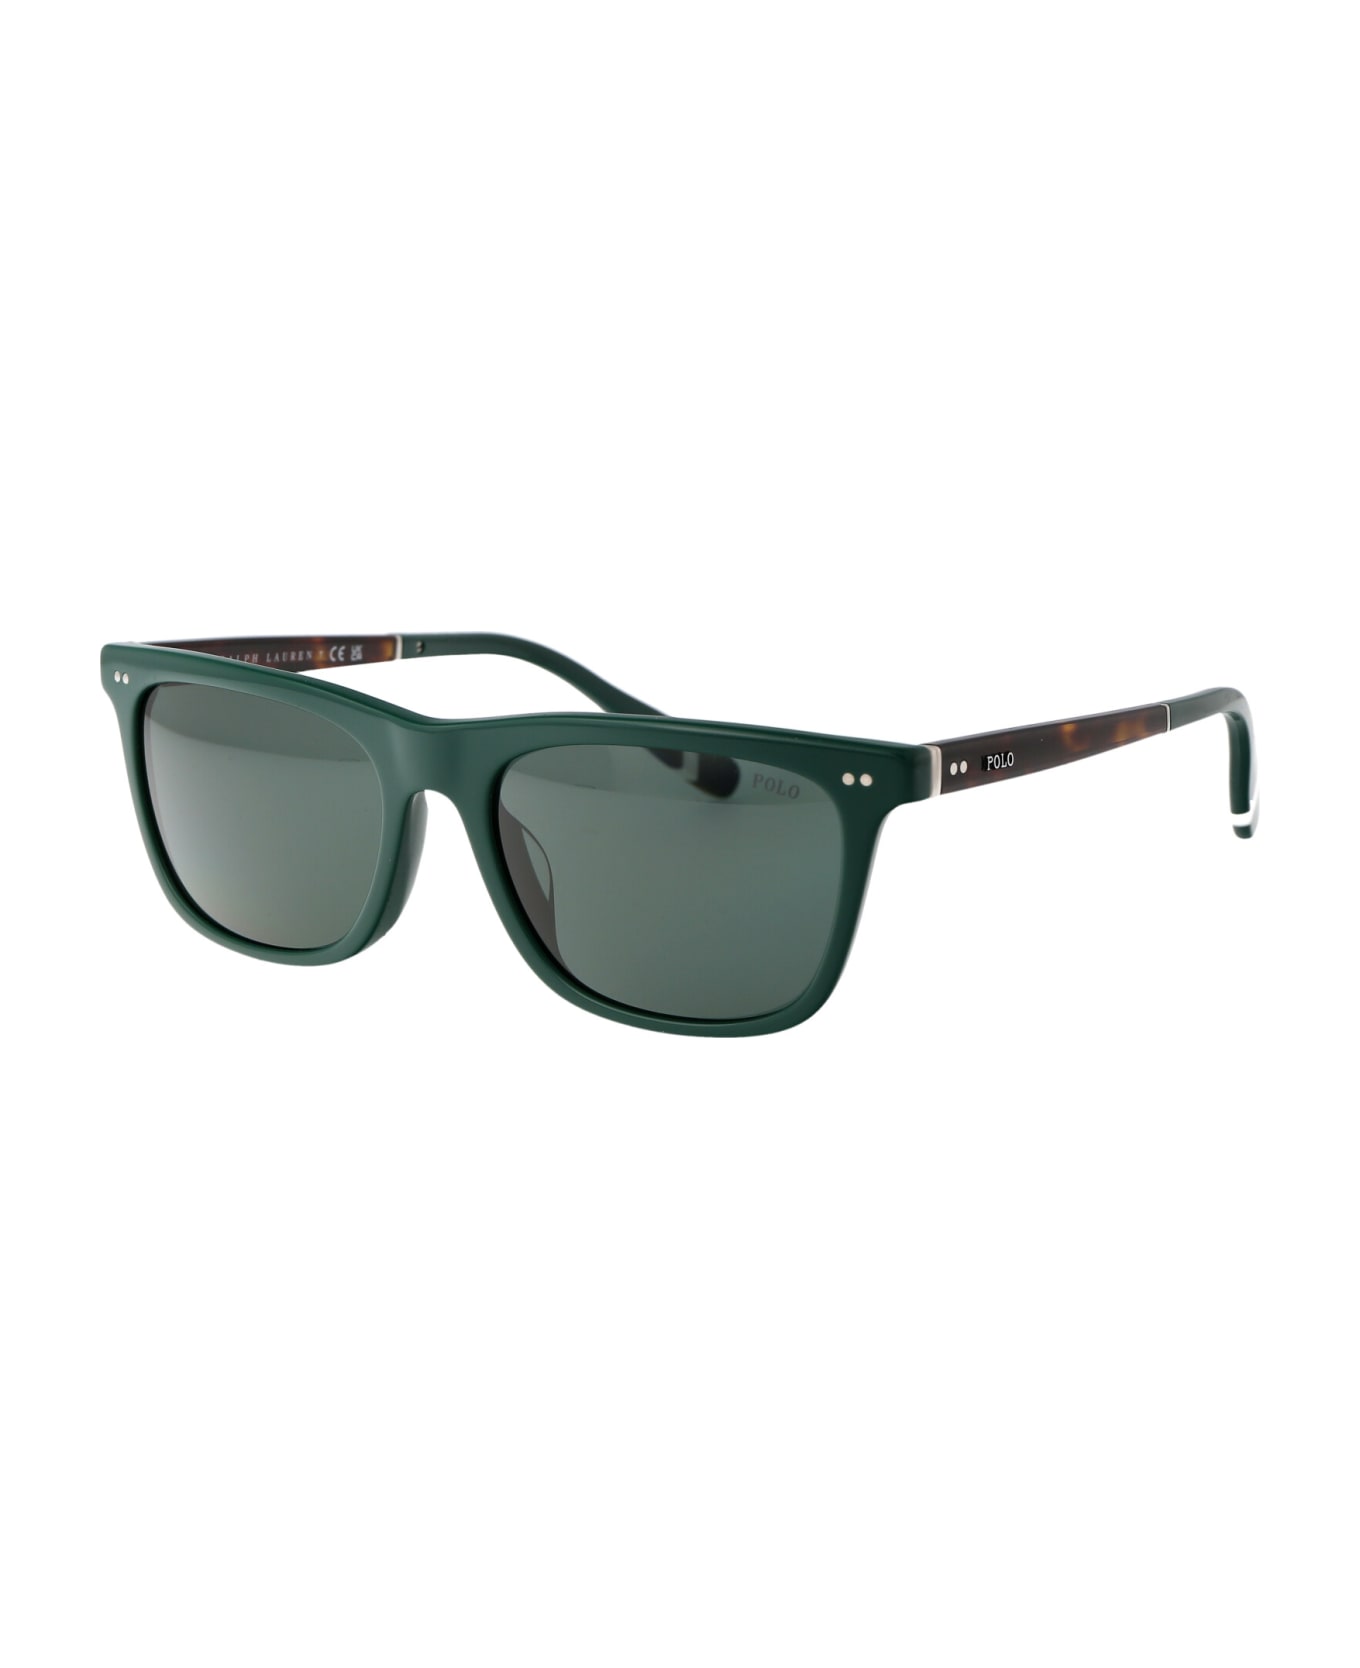 Polo Ralph Lauren 0ph4205u Sunglasses - 614171 Shiny Green